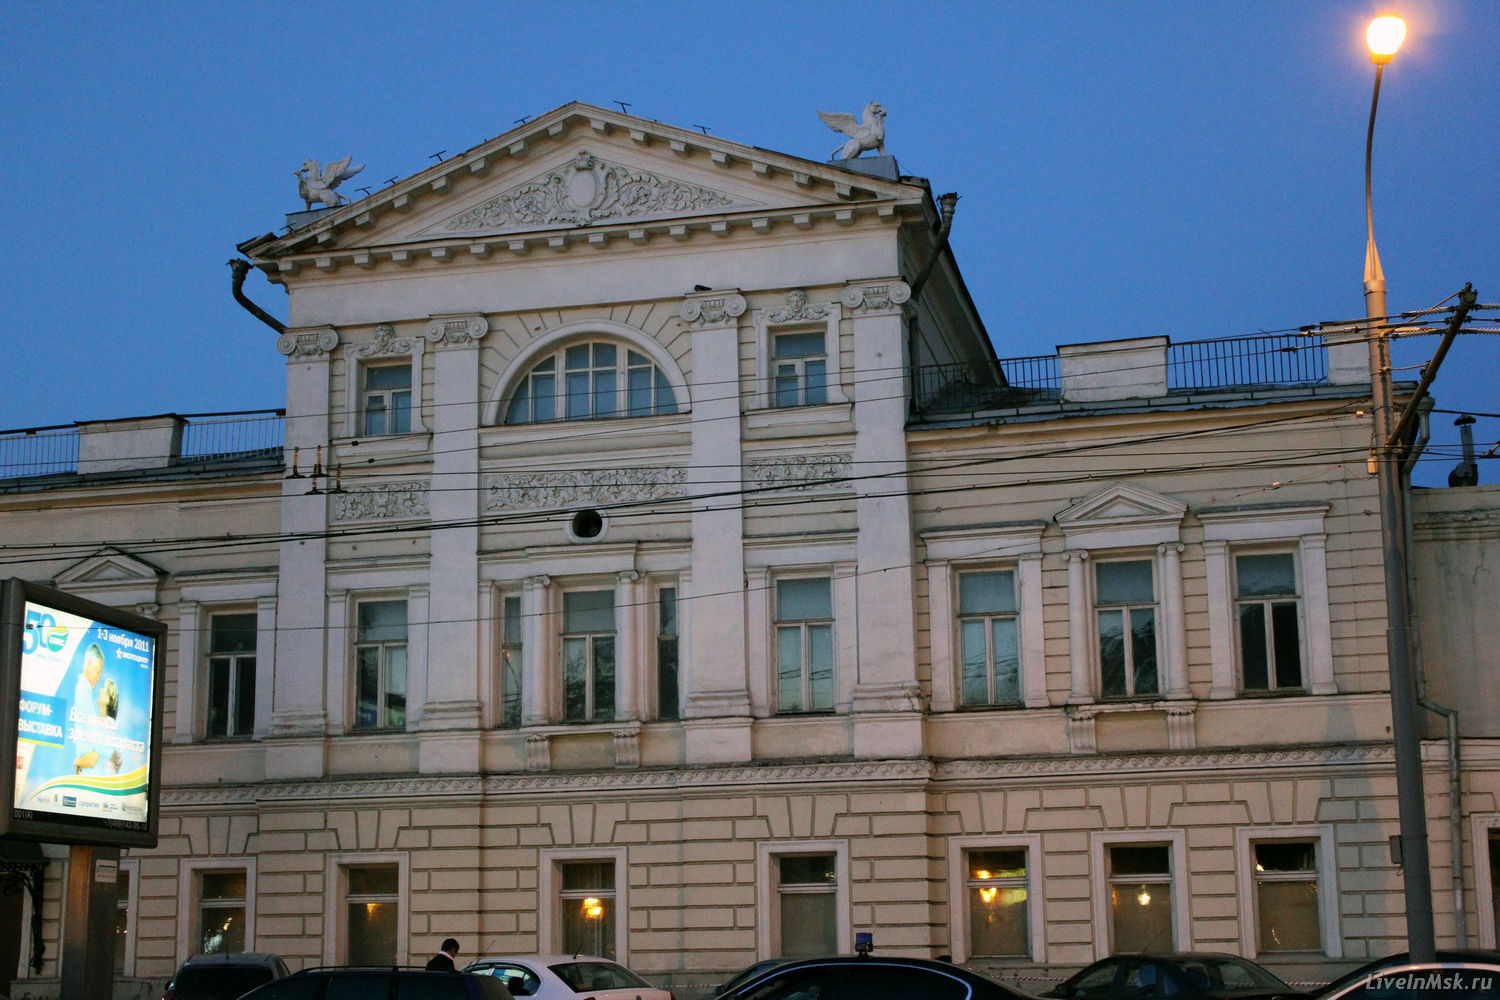 Дом Станиславского на Каретном ряду, фото 2012 года